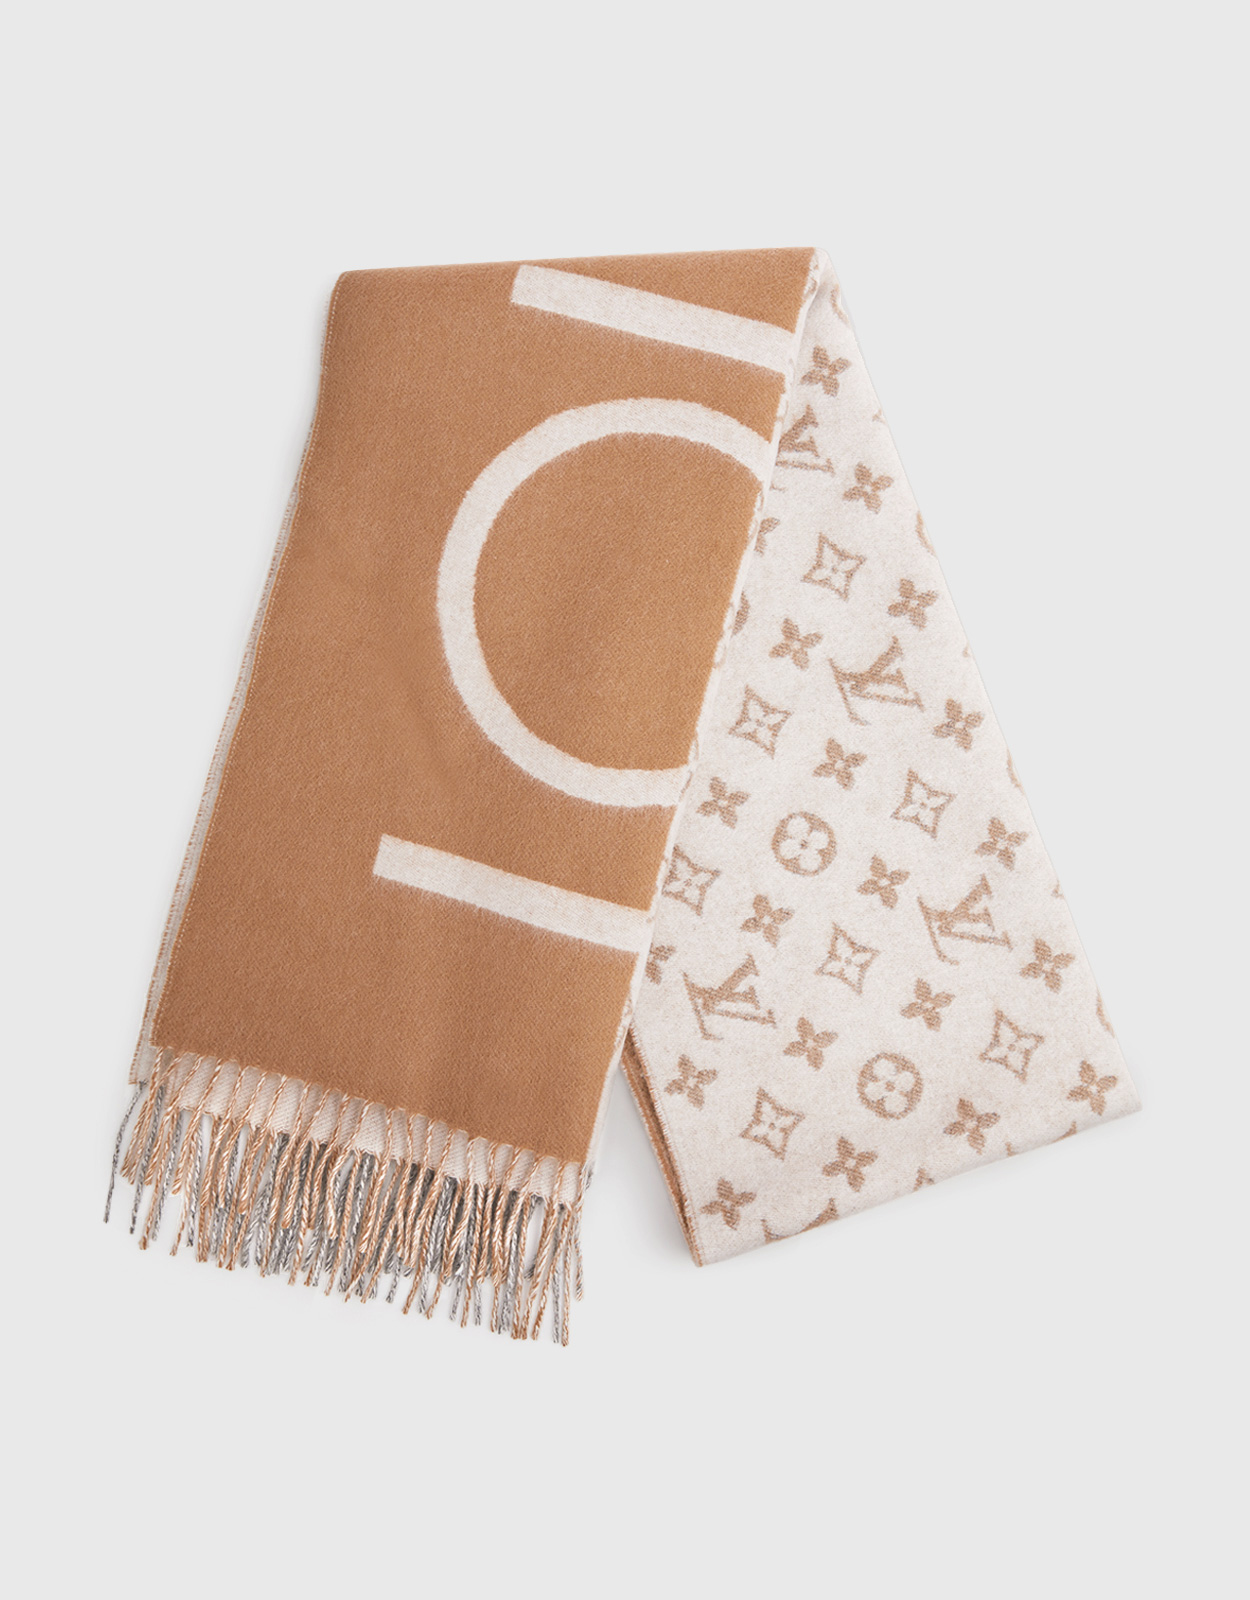 Louis Vuitton - Monogram Scarf